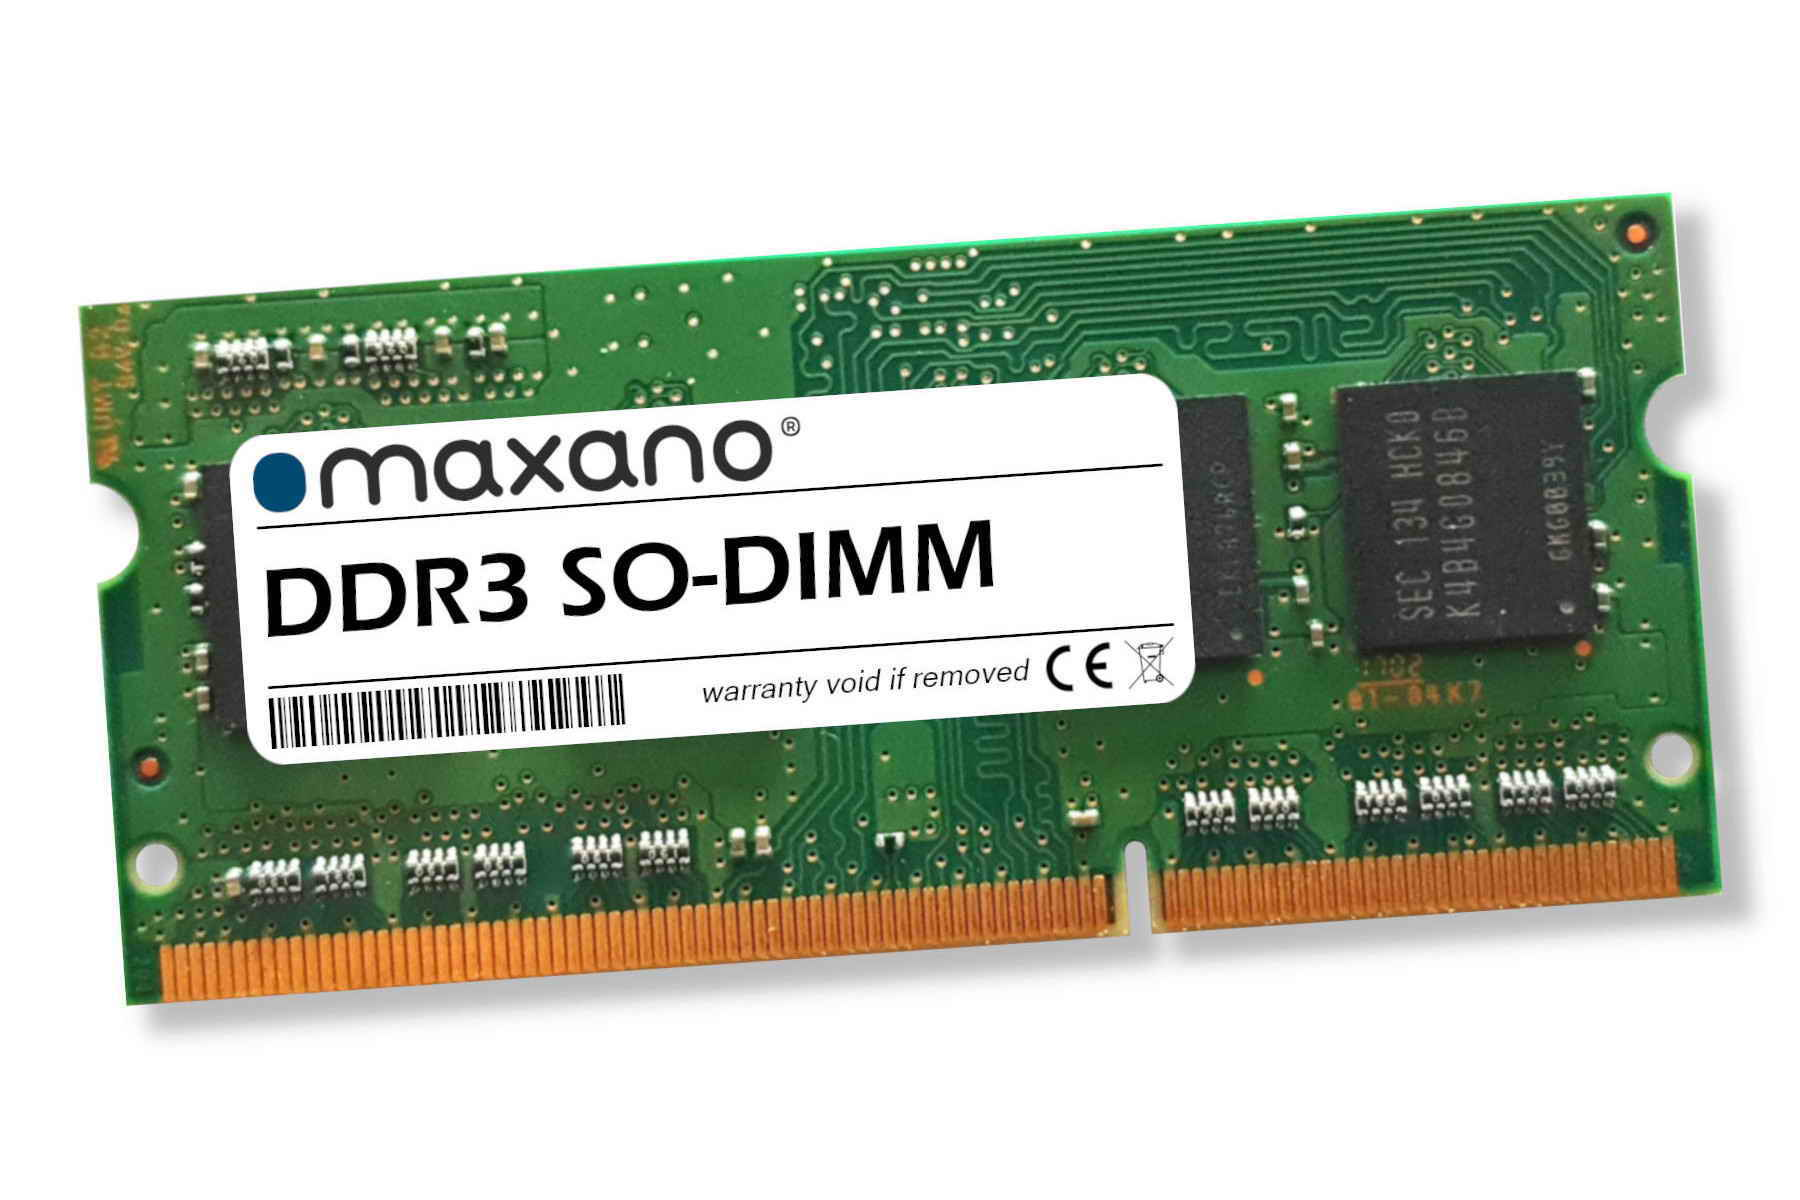 AS6104T 4 MAXANO Asustor GB SDRAM für SO-DIMM) RAM Arbeitsspeicher (PC3-12800 4GB